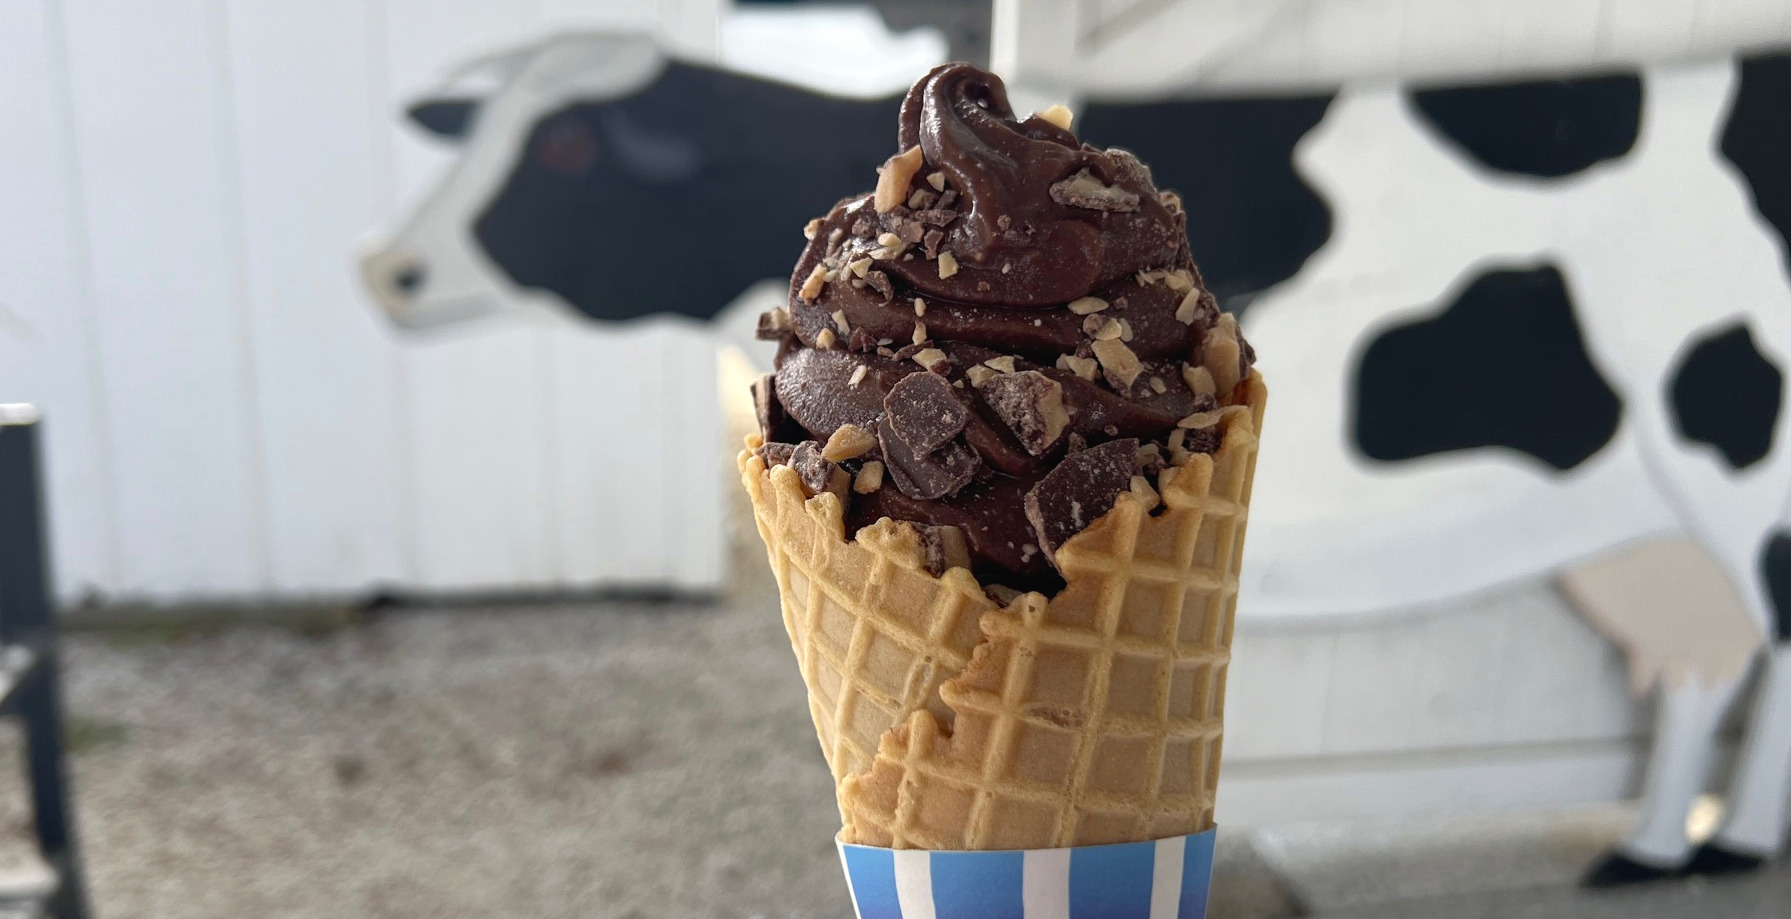 Sidney Dairy Barn is open for ice cream season